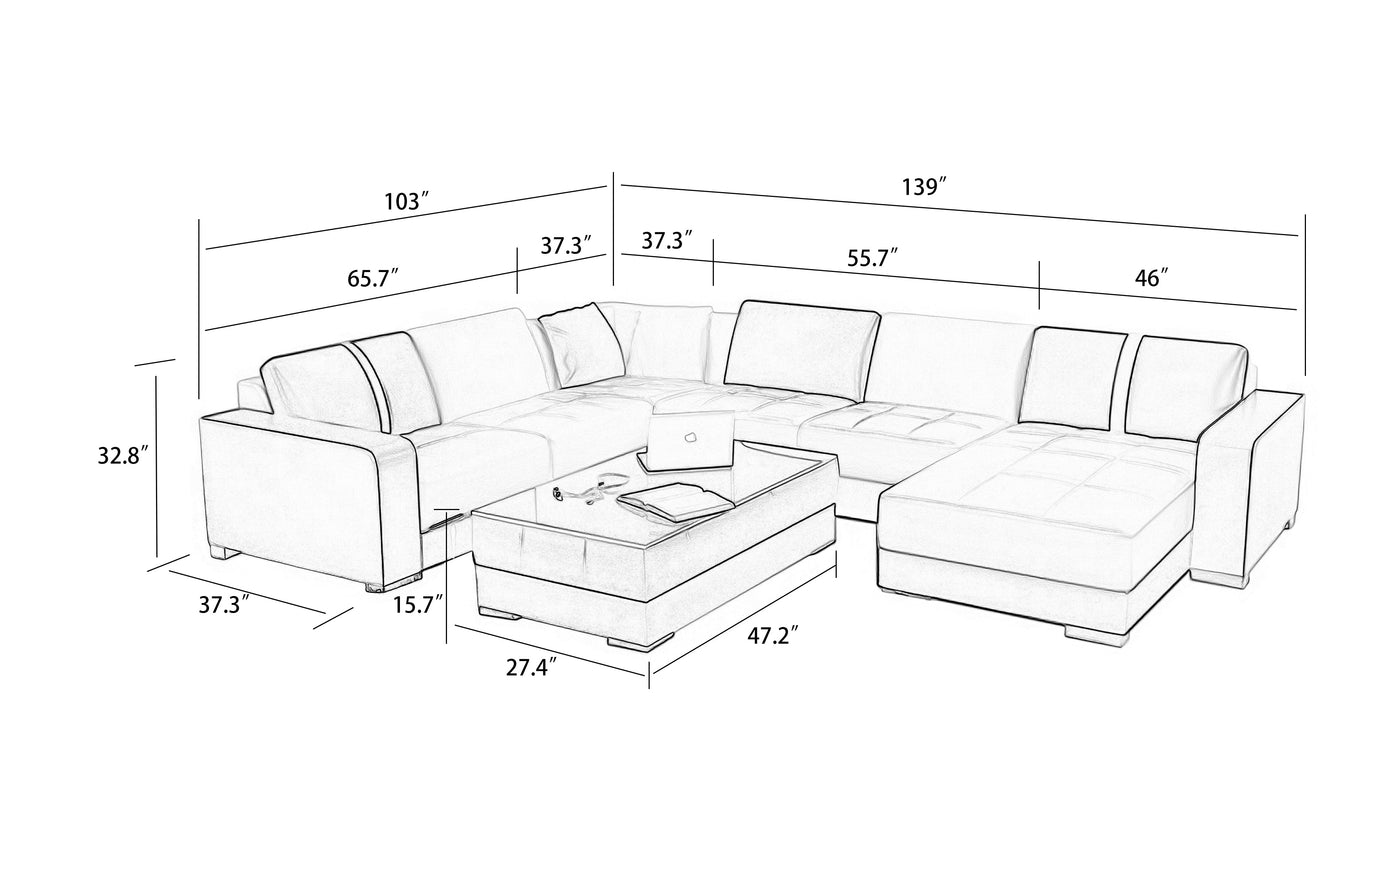 Ceaira Modern Modular Tufted Leather Sectional – Jubilee Furniture